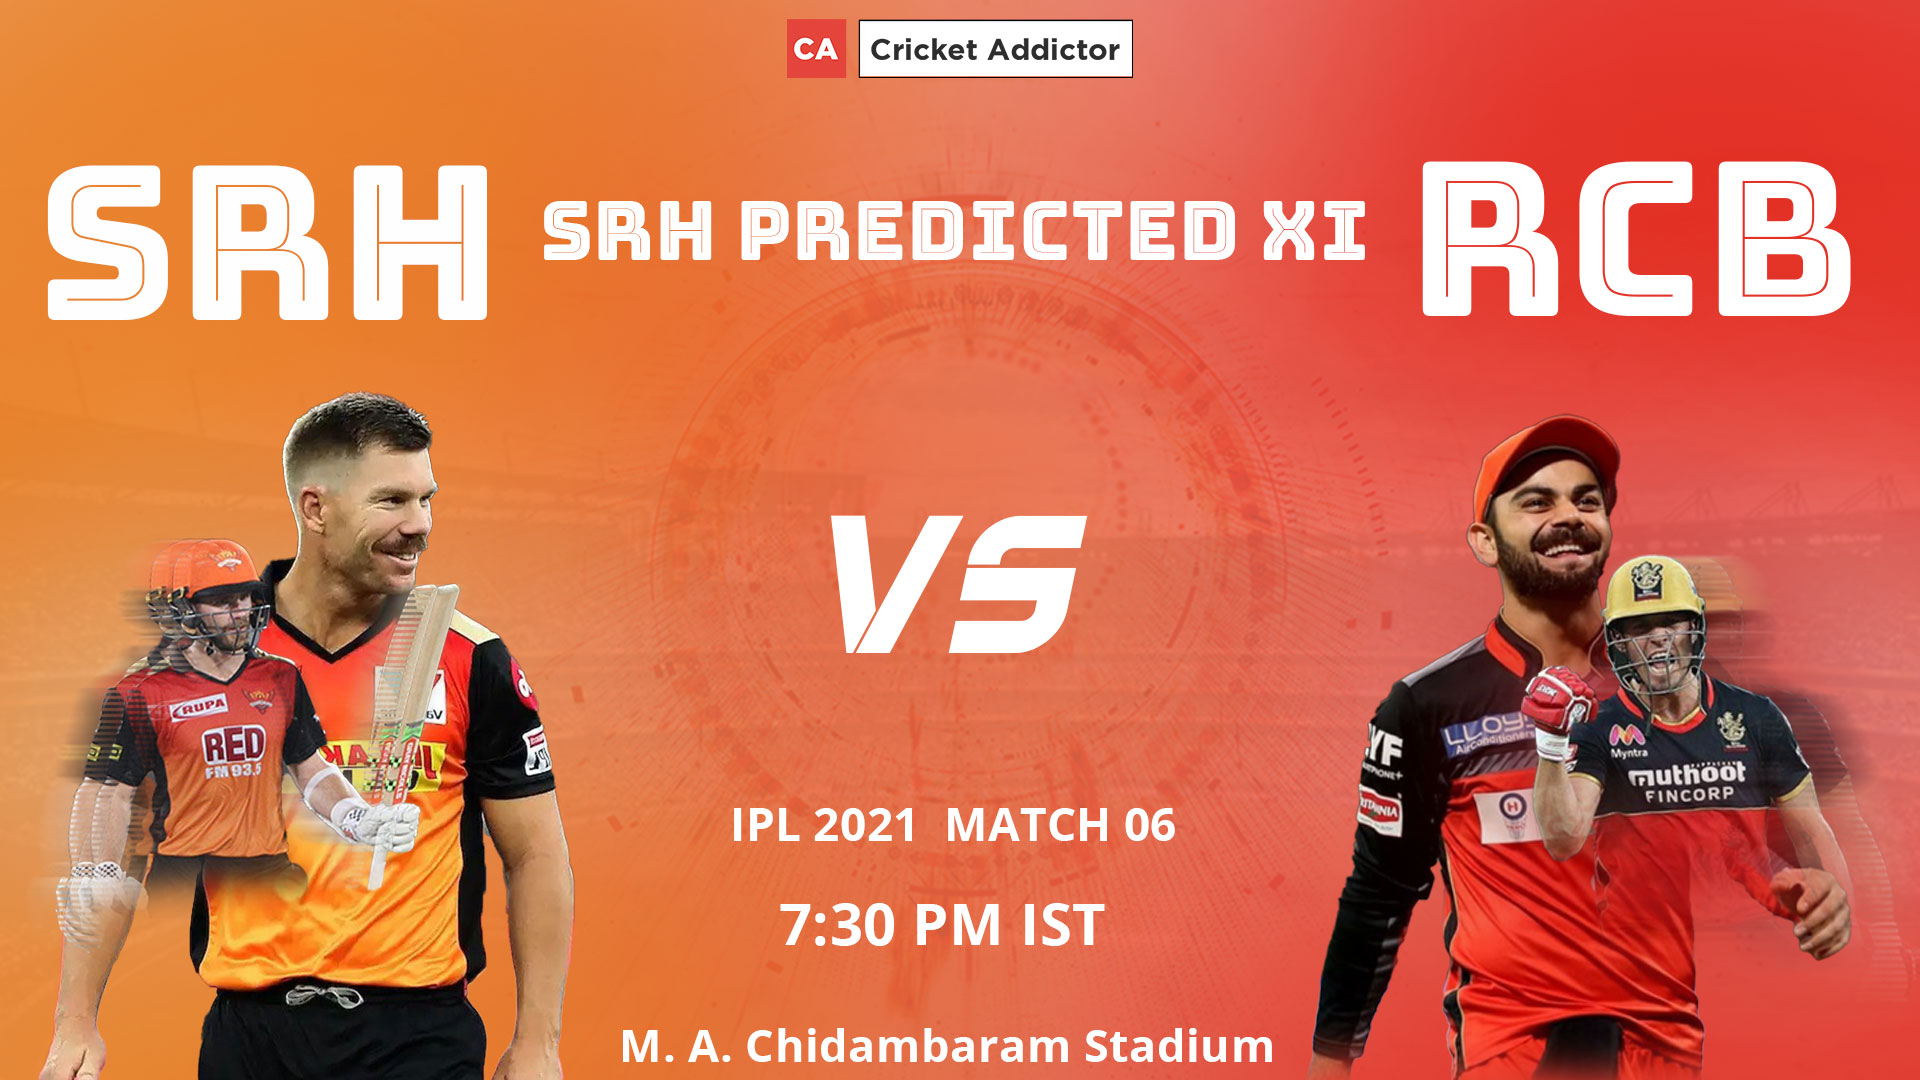 IPL 2021, SunRisers Hyderabad, SRH, predicted playing XI